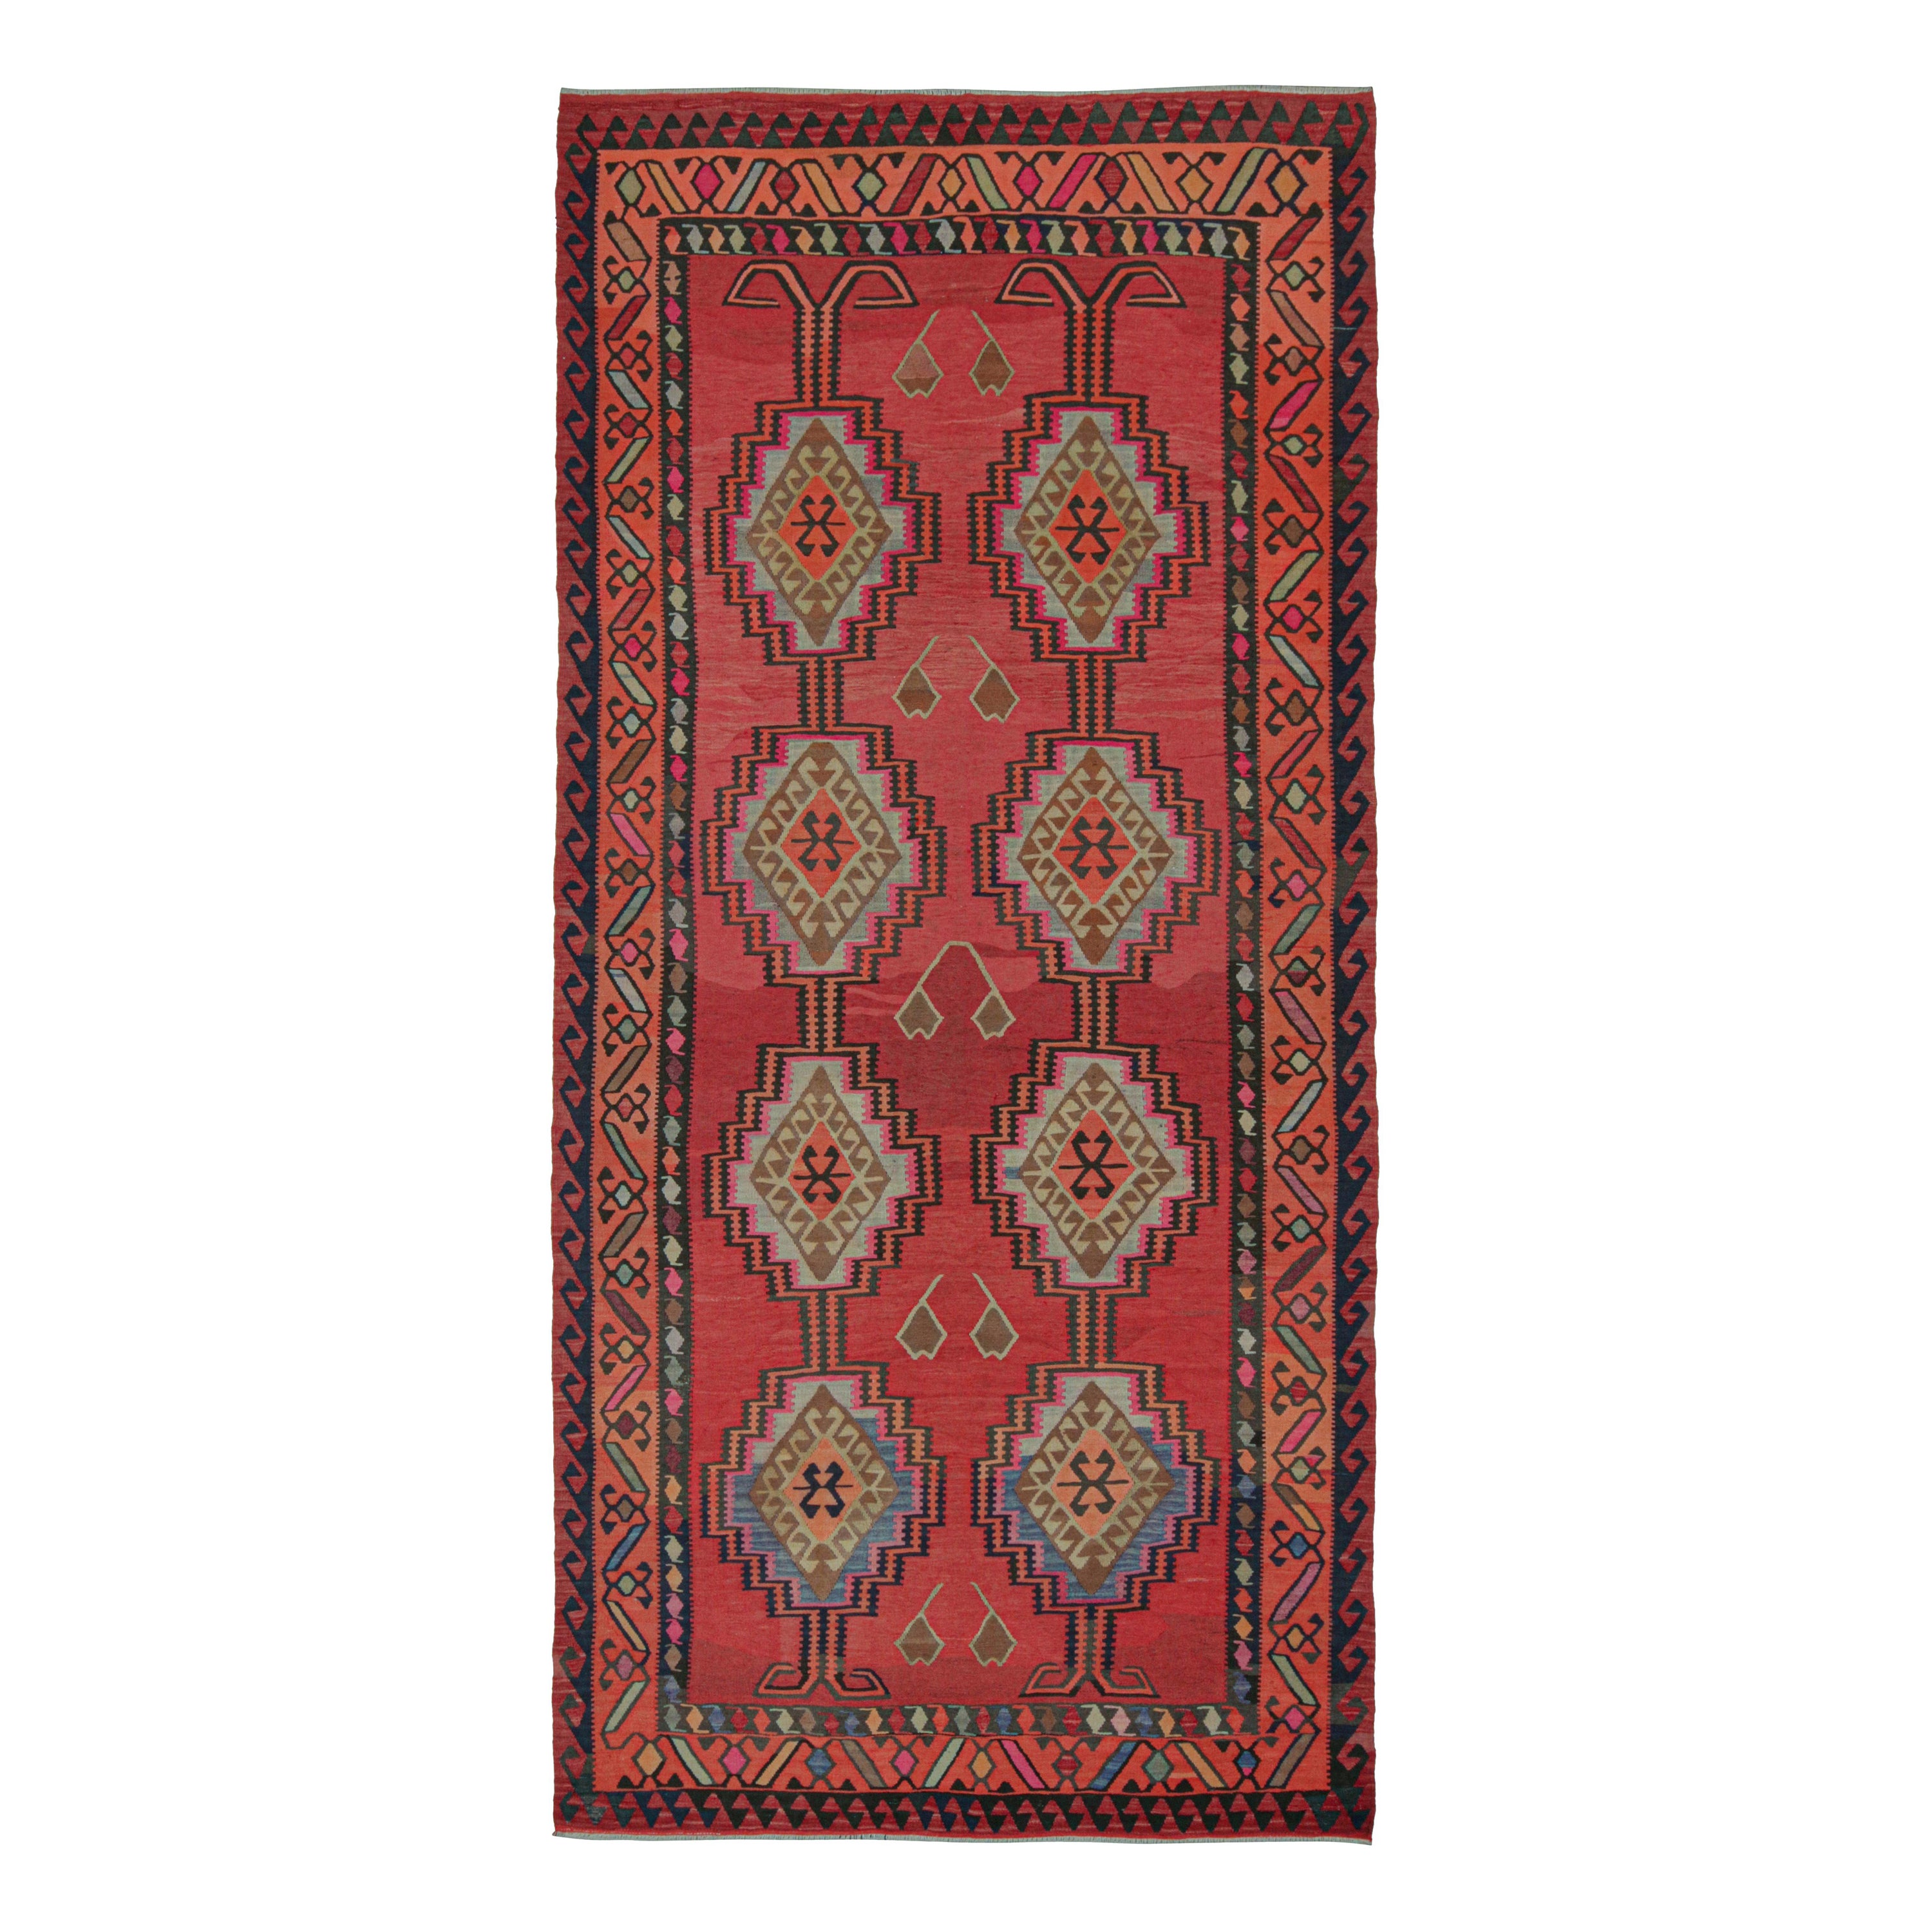 Vintage Northwest Persian Kilim in Red with Geometric Patterns by Rug & Kilim